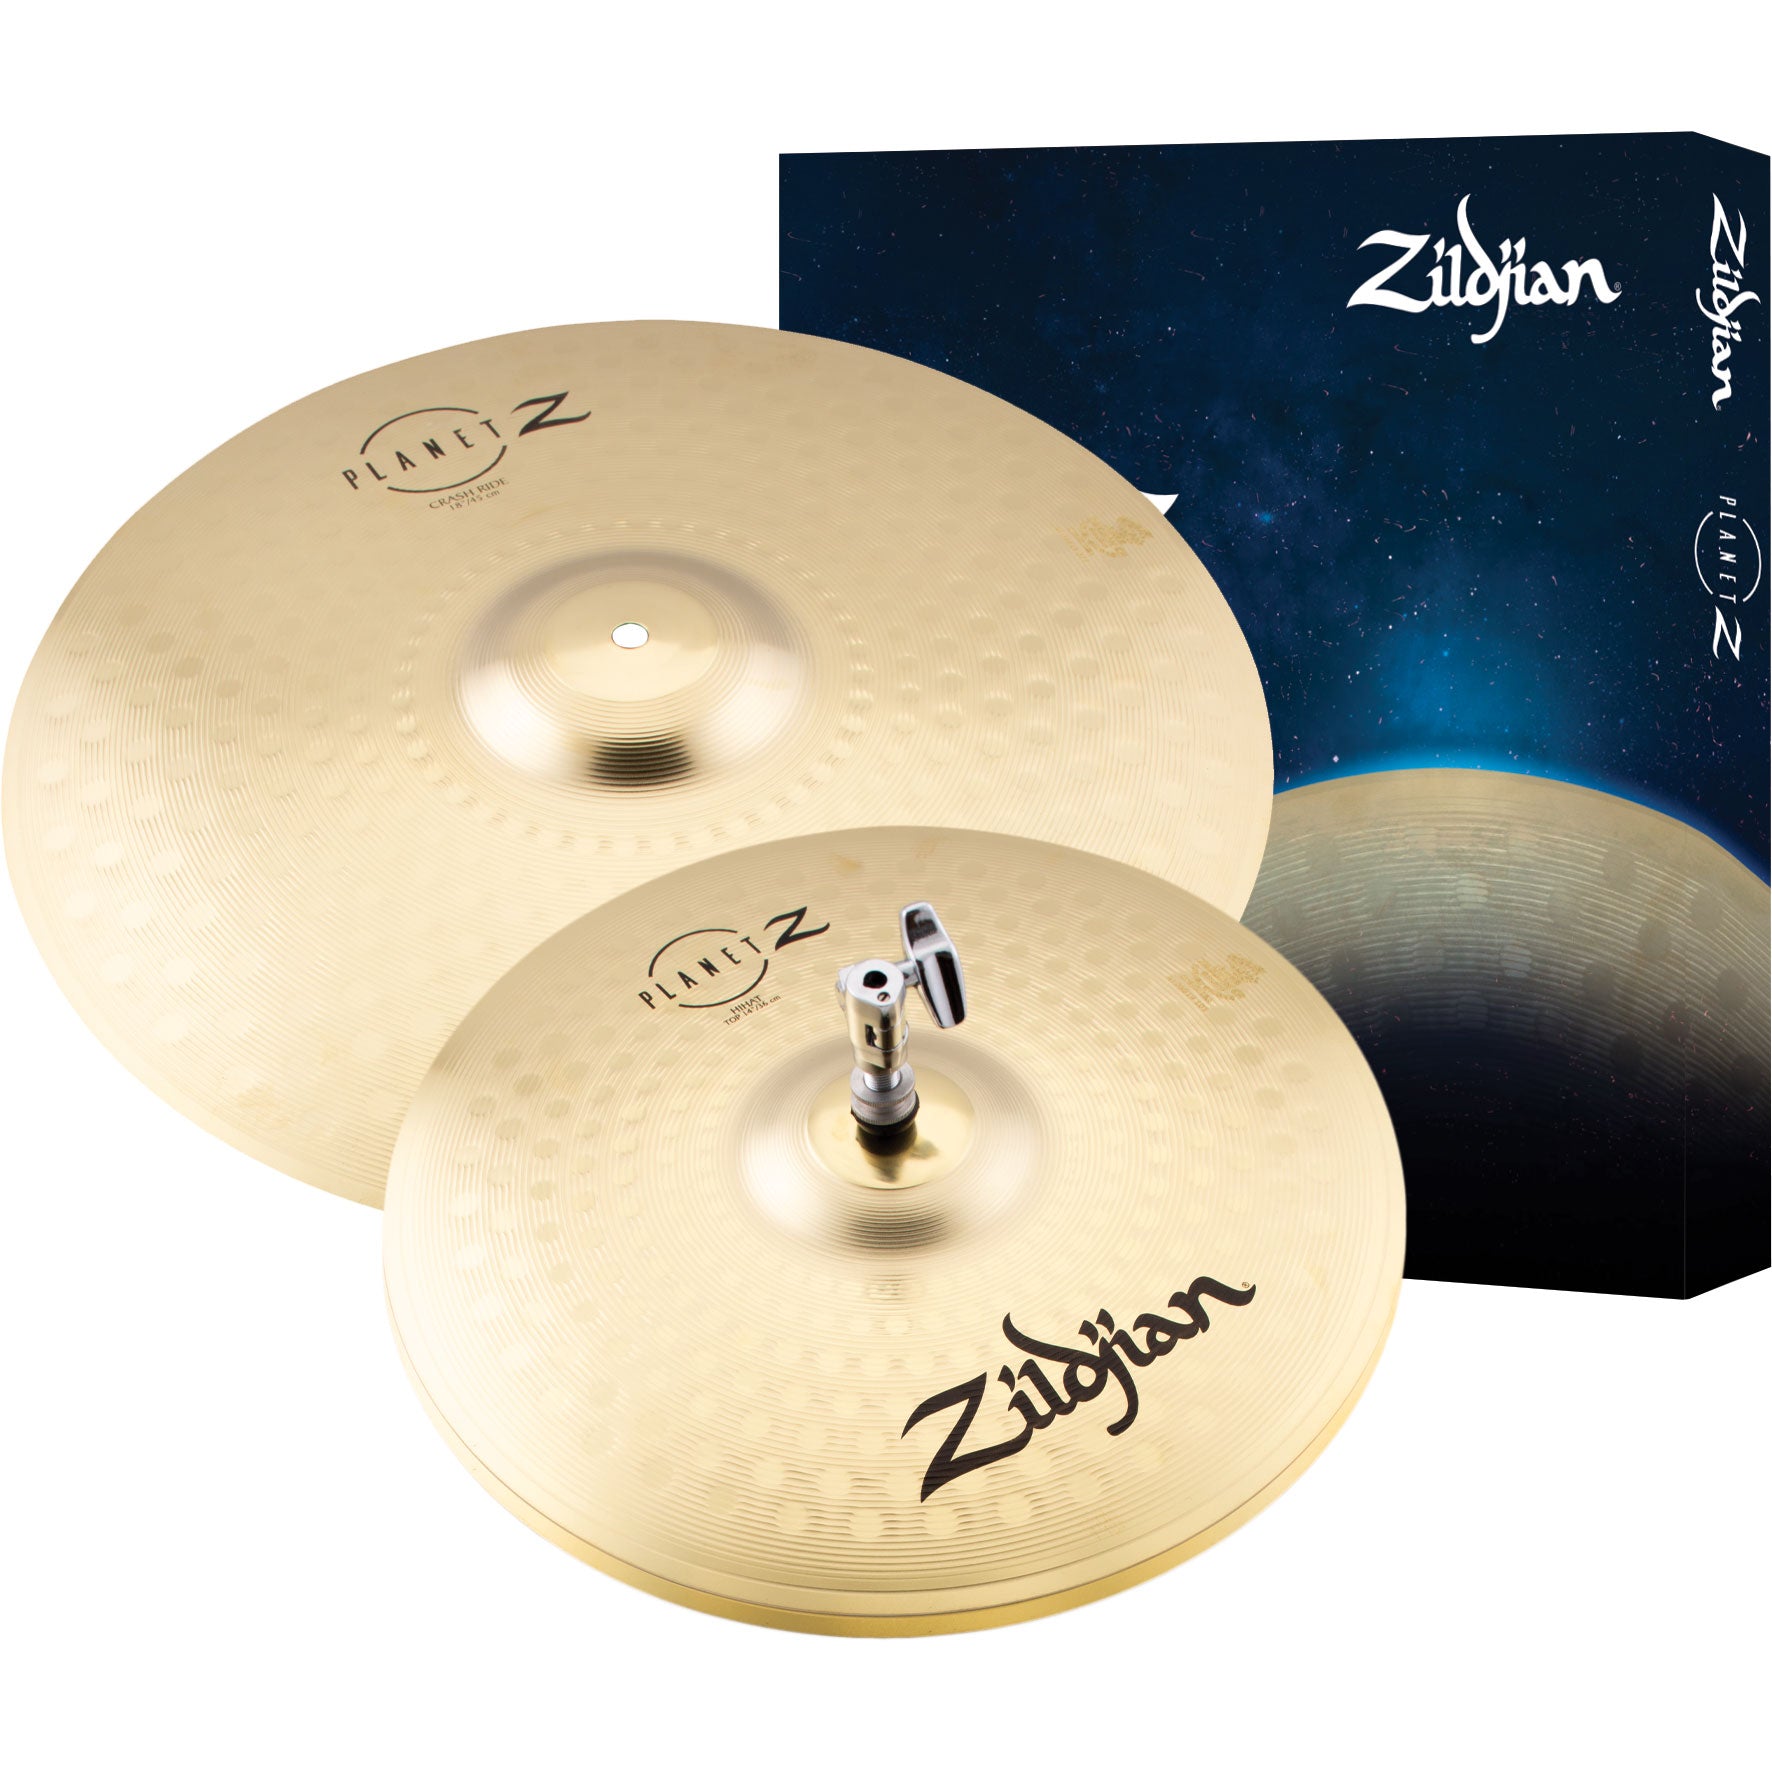 Zildjian Planet Z Pro 2-Piece Cymbal Pack